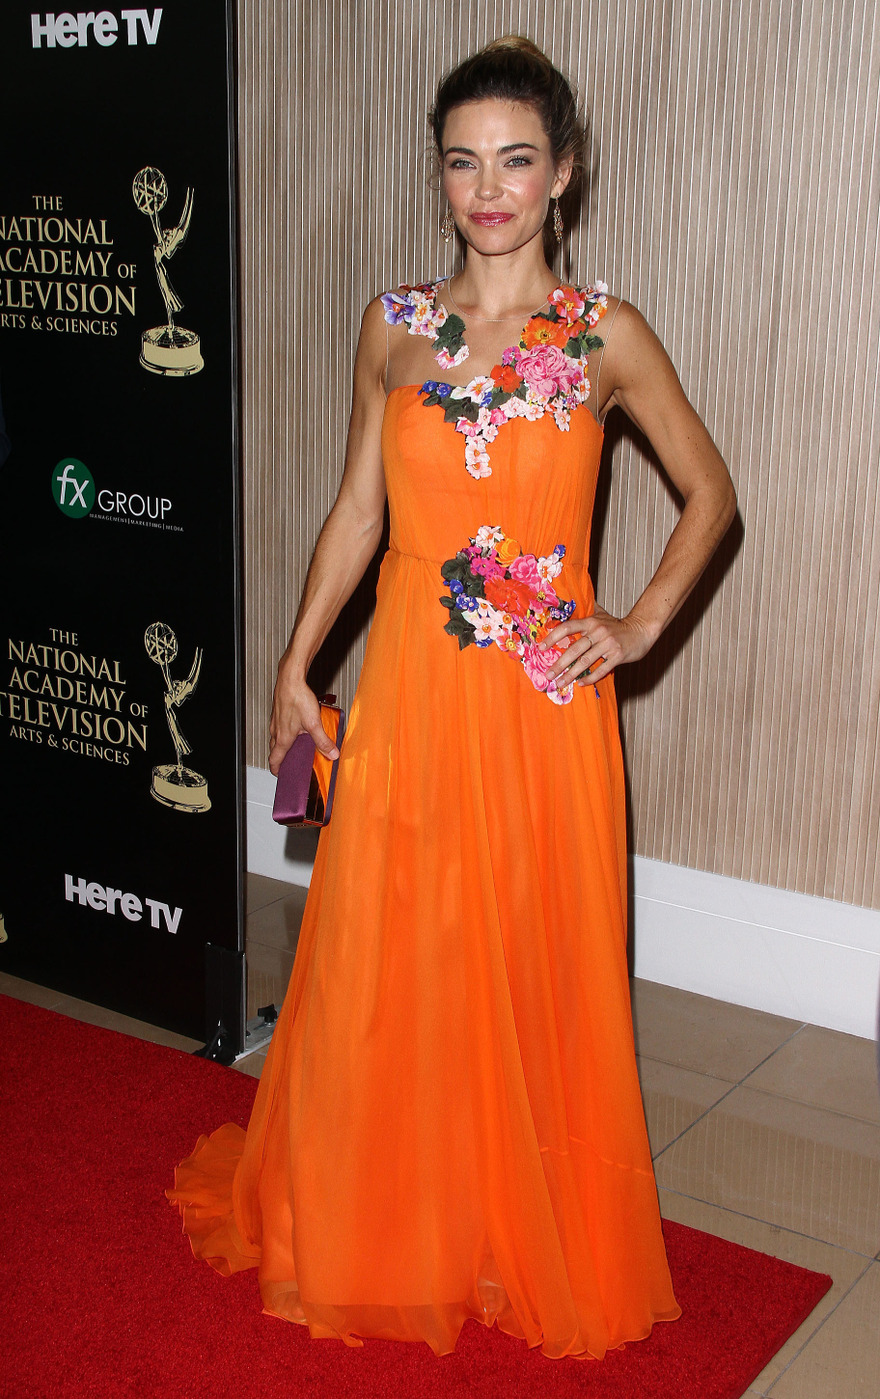 Daytime Emmy Awards Fug Carpet: So Very Many Other People